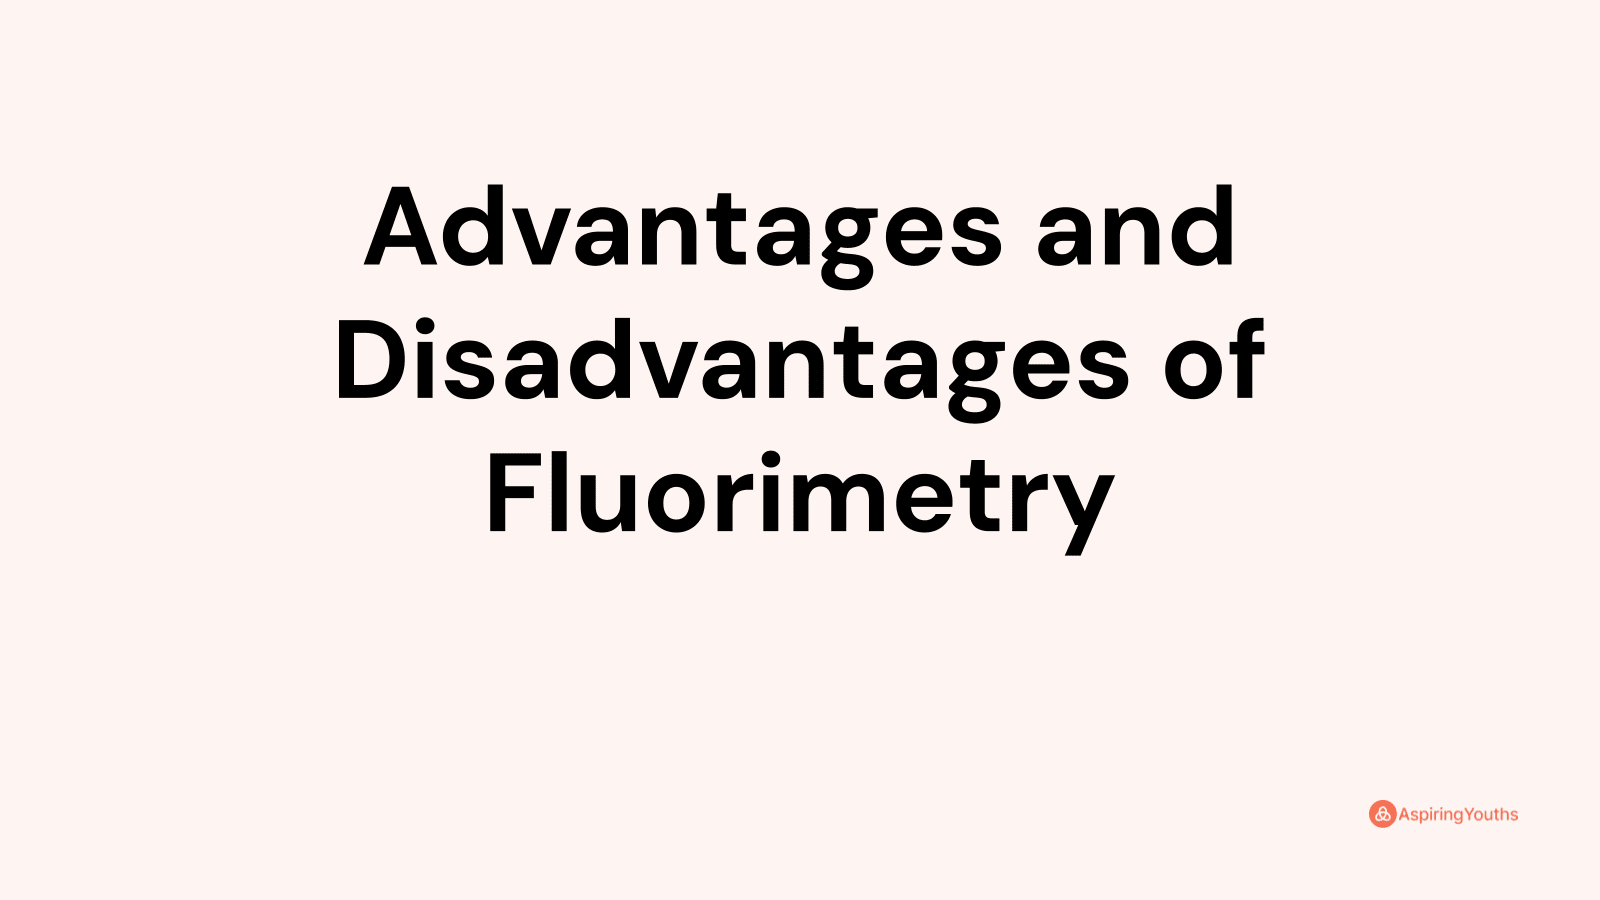 Advantages and disadvantages of Fluorimetry